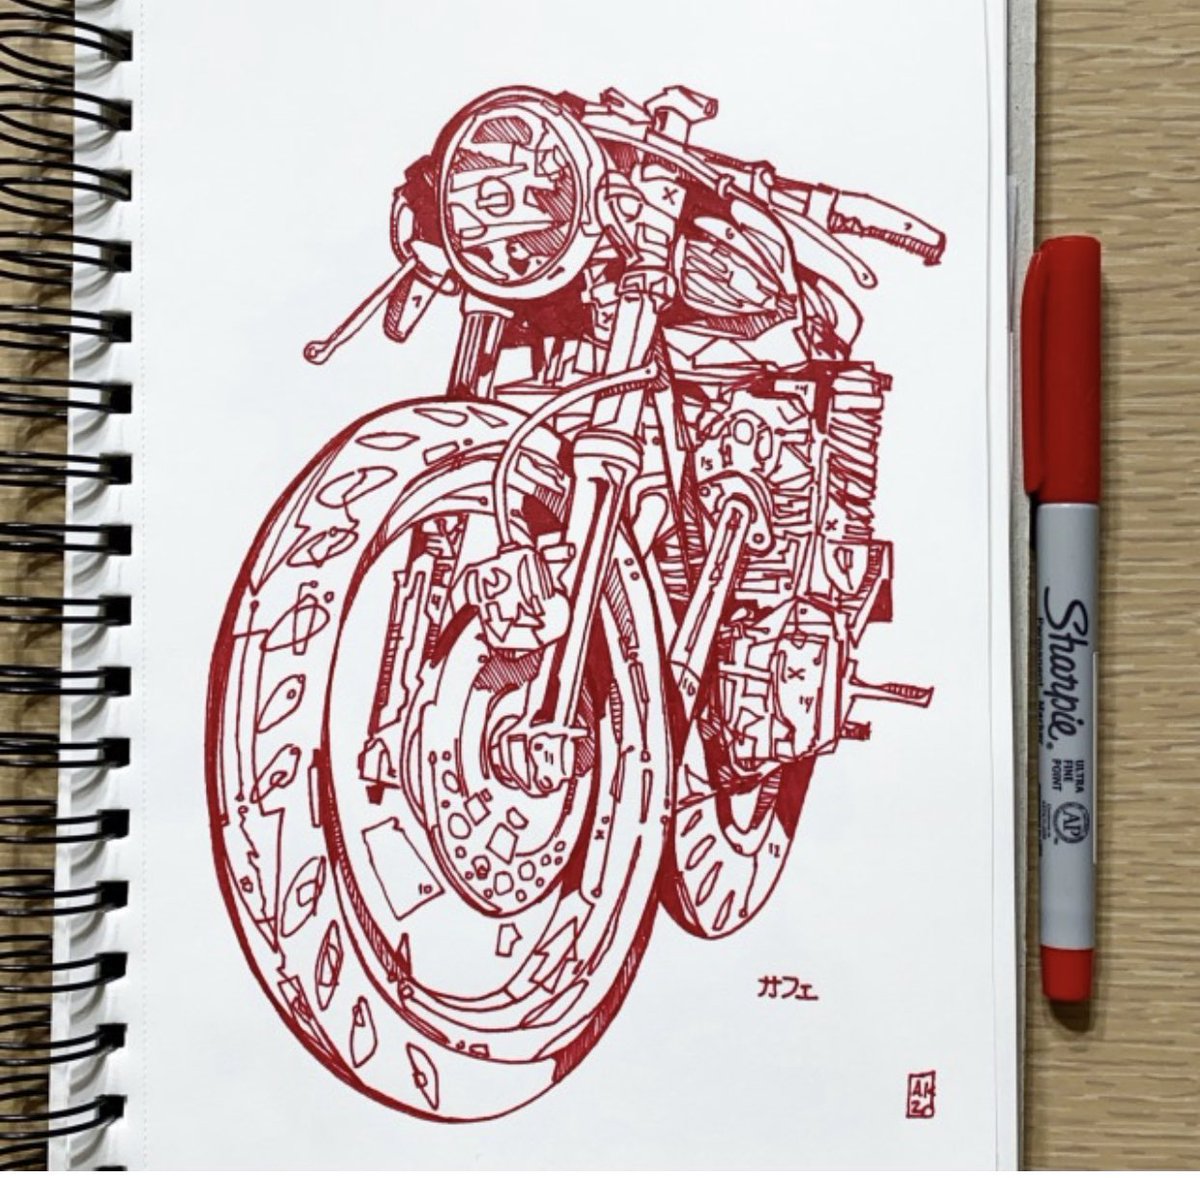 Sketchbook drawing 

Cafe Racer
6” x 9” 
Ink on paper

Thanks for looking 

#caferacer #motorcycleart #norton #triumph #bmw #motorcycle #ftw #sketchbook #art #design #sketchbook #Motorsport #drawingart #drawingoftheday #drawing #illustration #designer